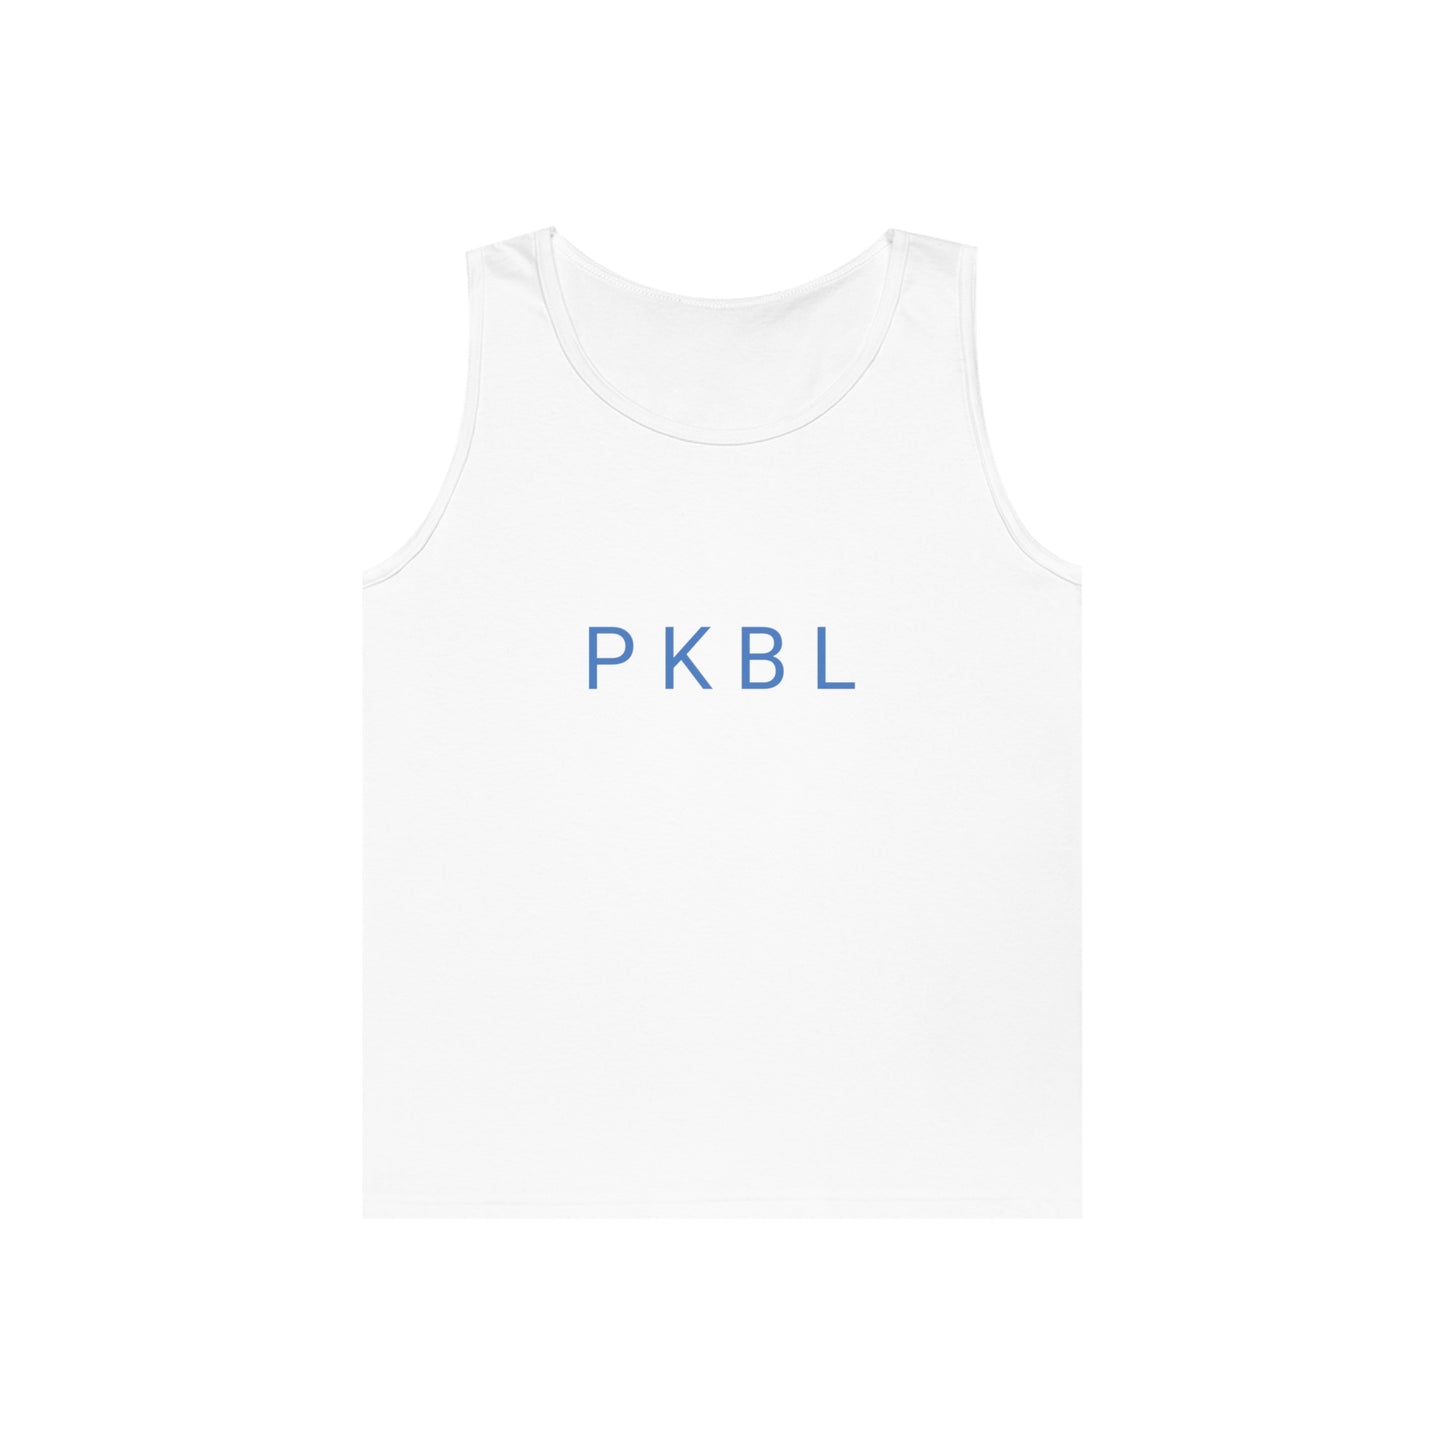 PKBL Pickleball Unisex Cotton Tank Top